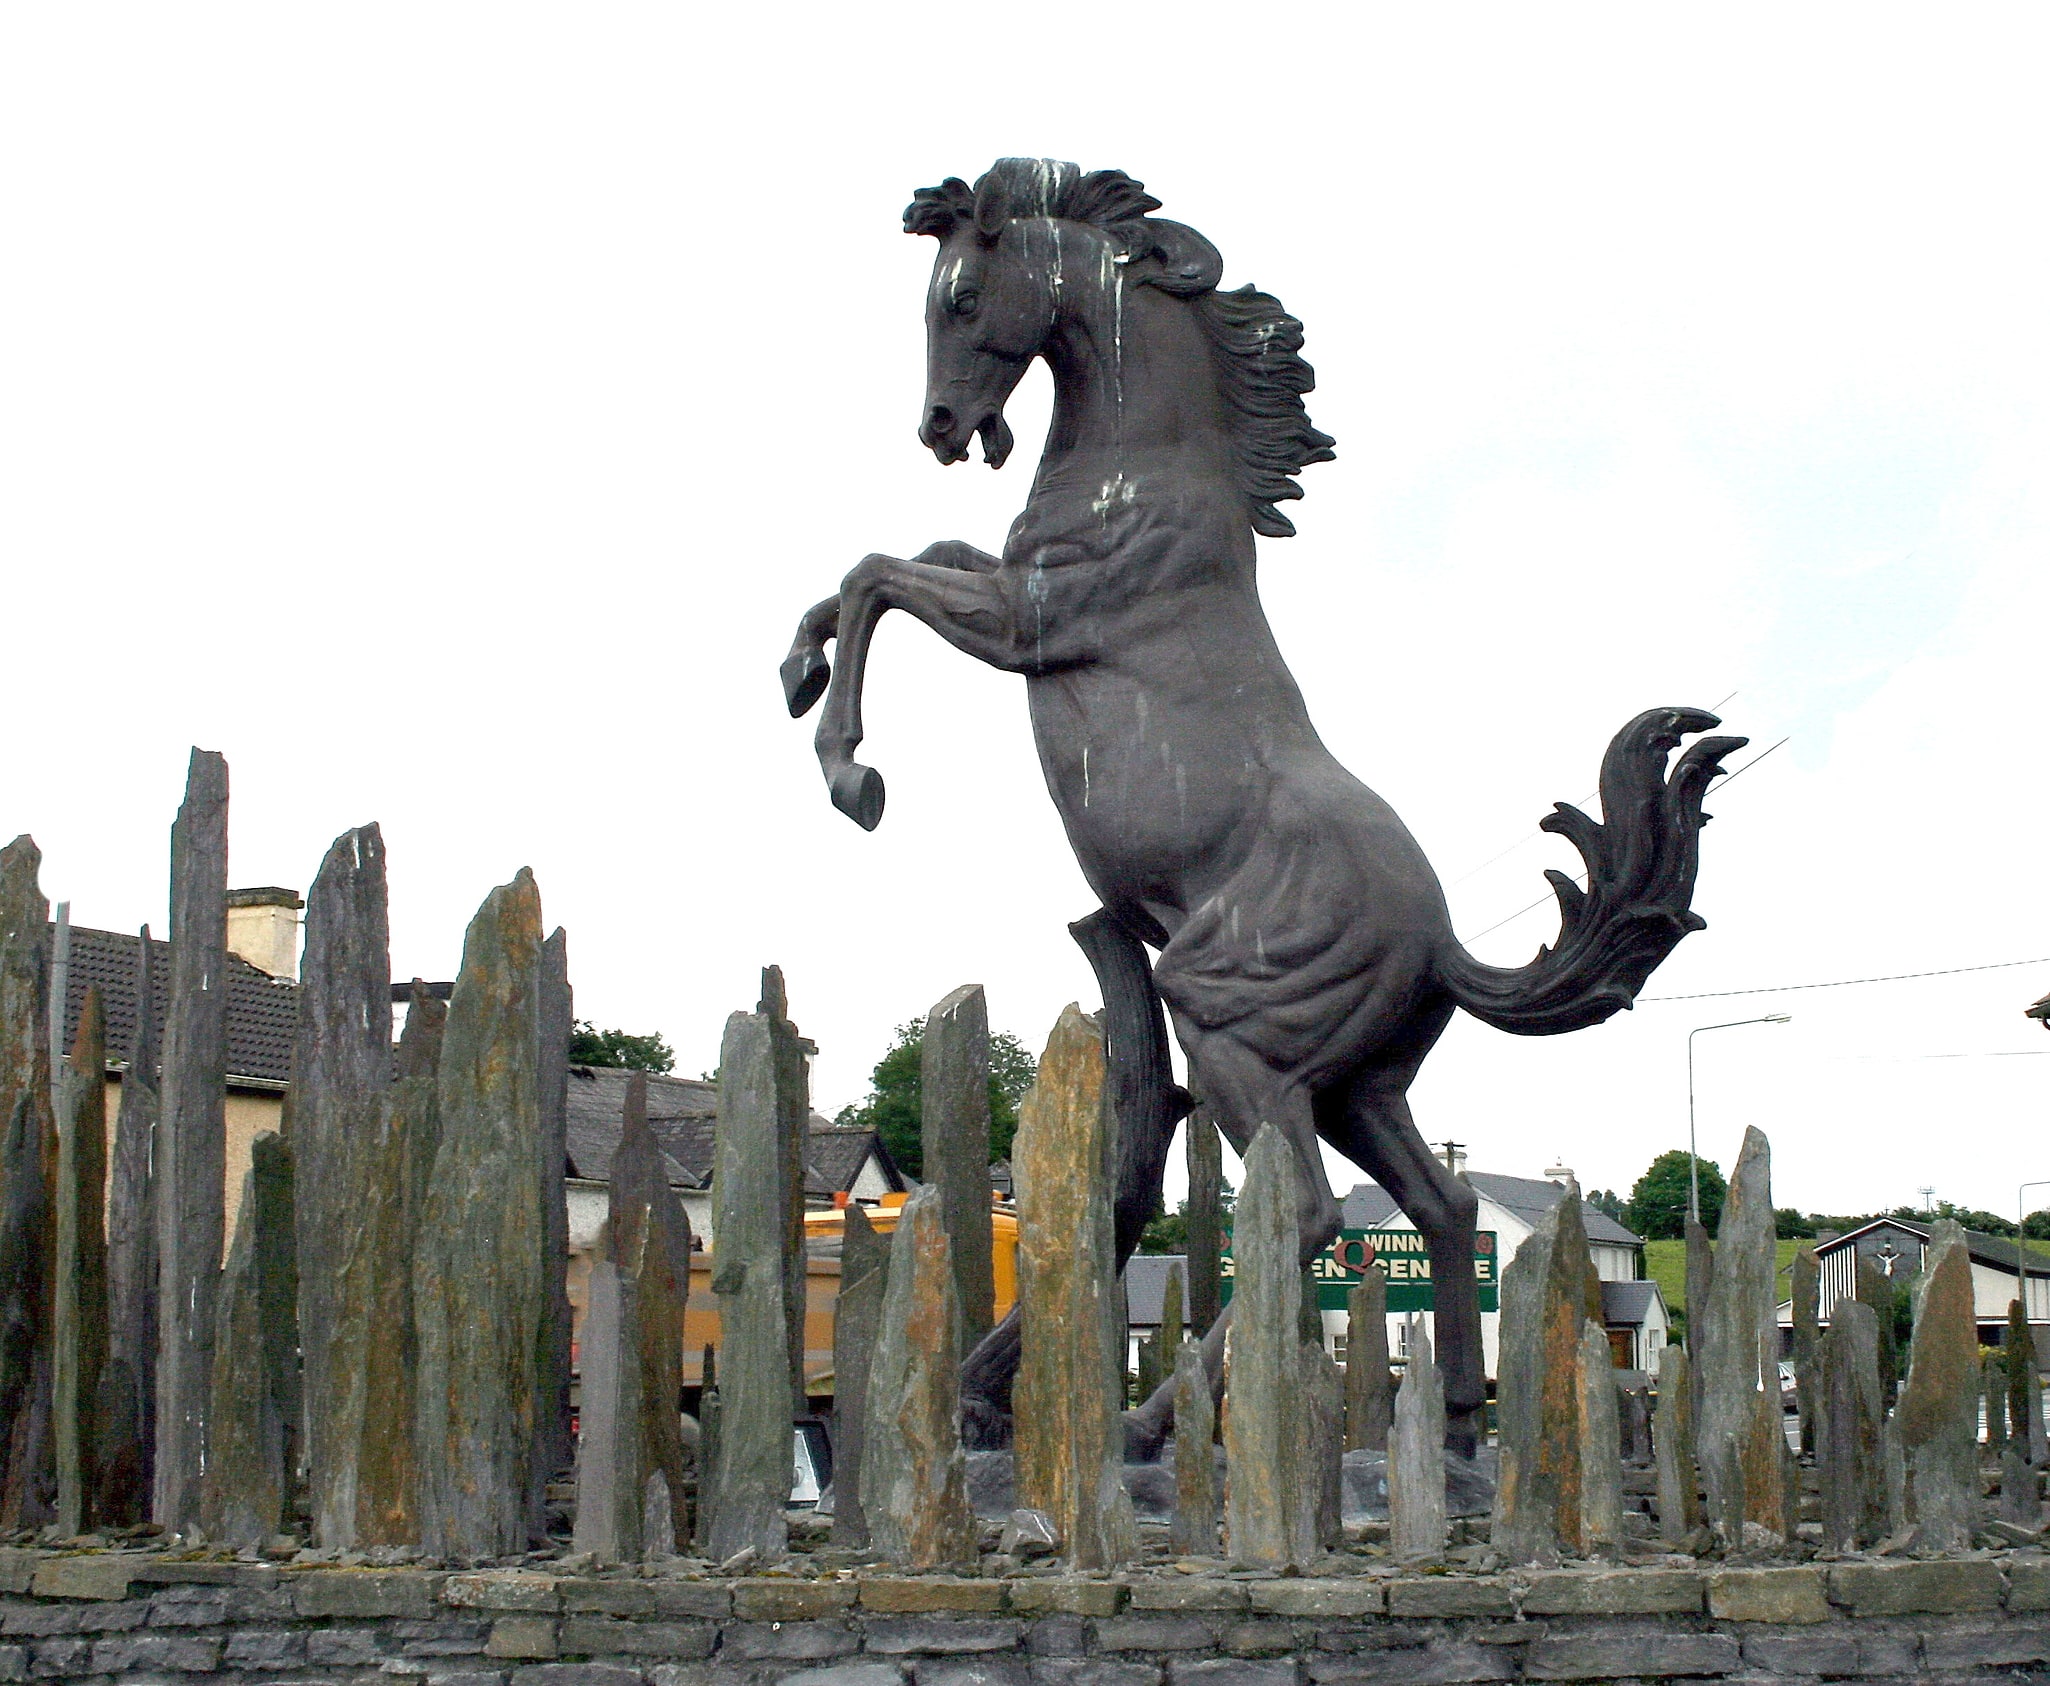 Horseleap, Ireland